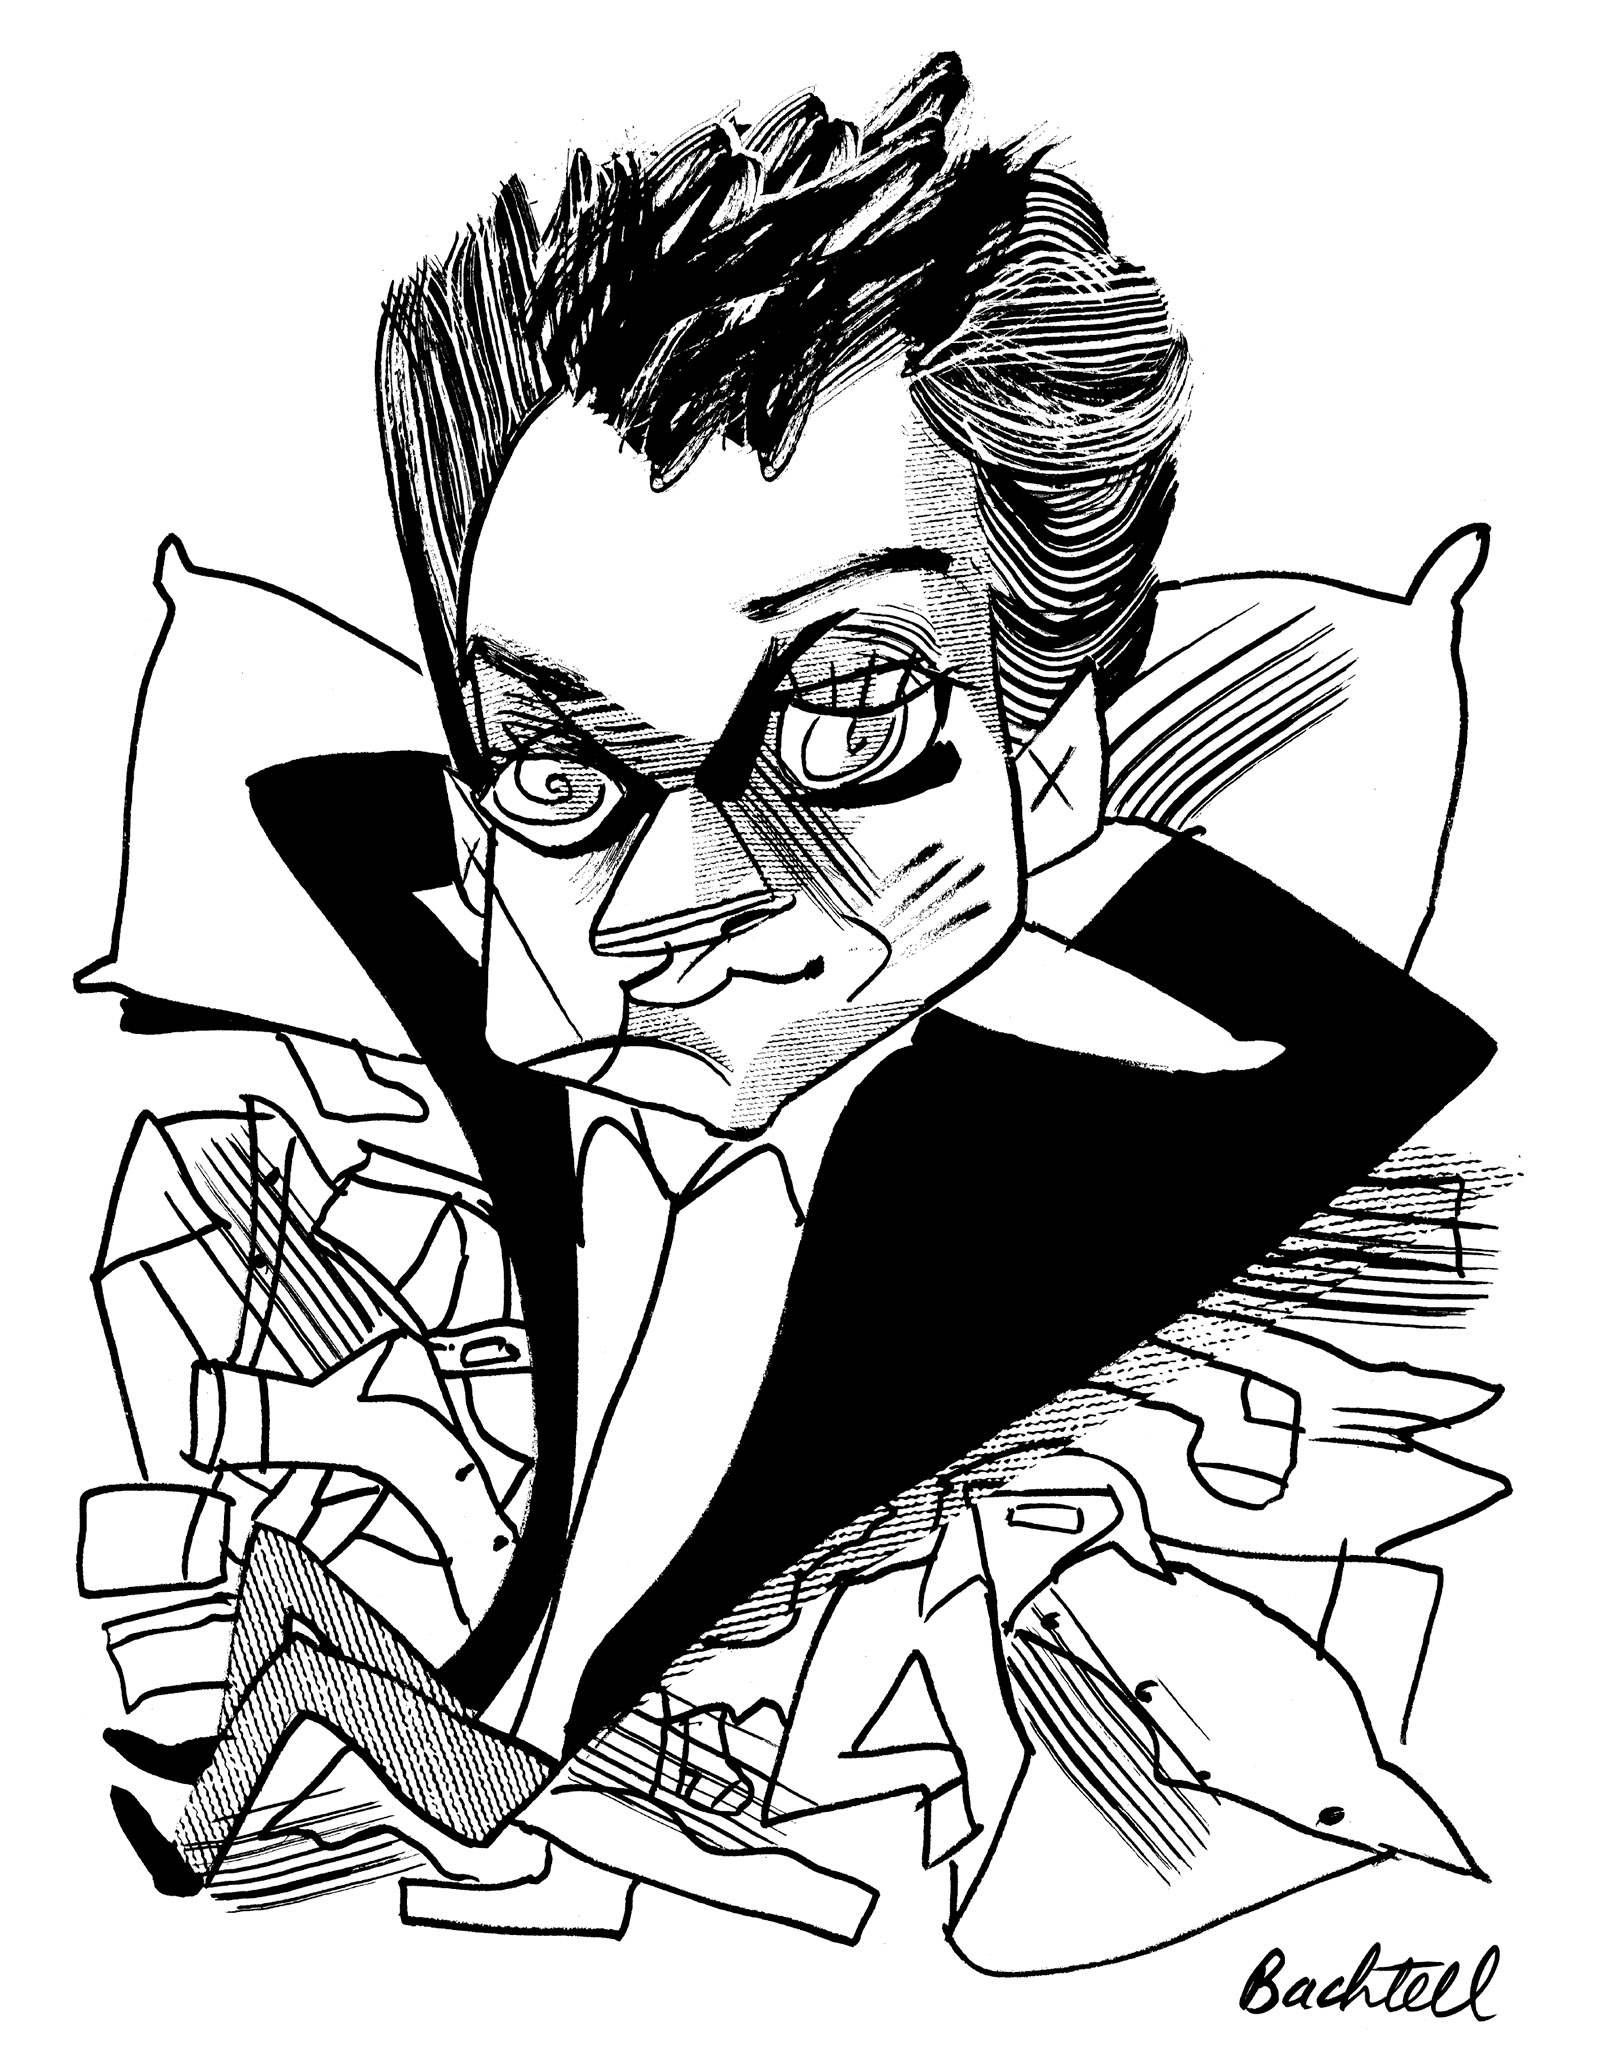 Michael Hofmann; drawing by Tom Bachtell